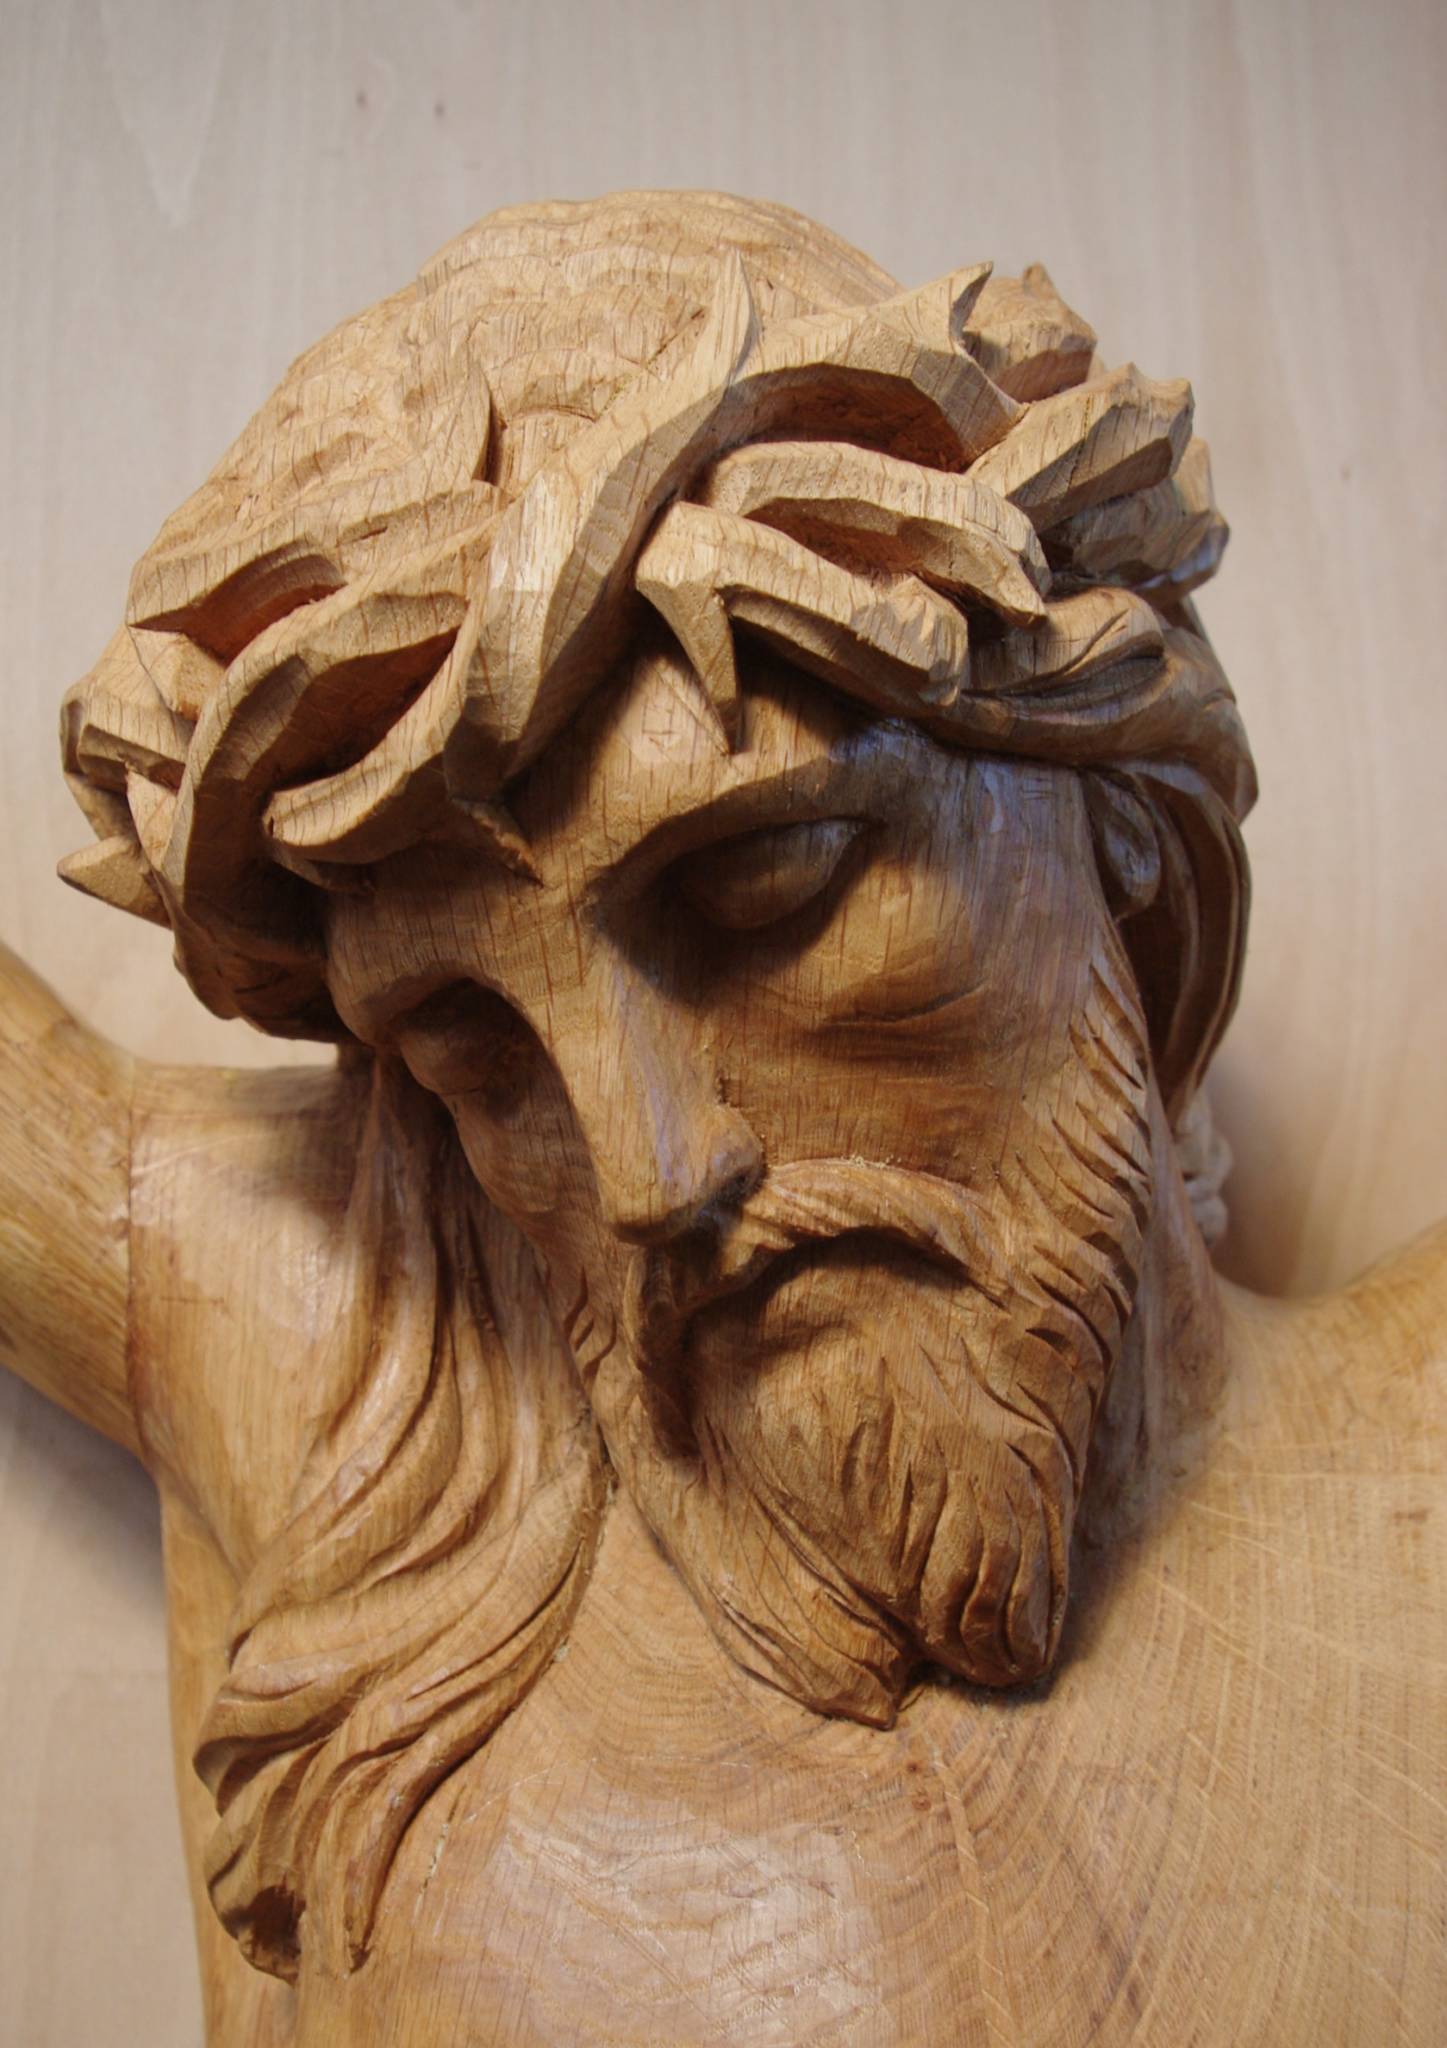 Carved figure of Christ